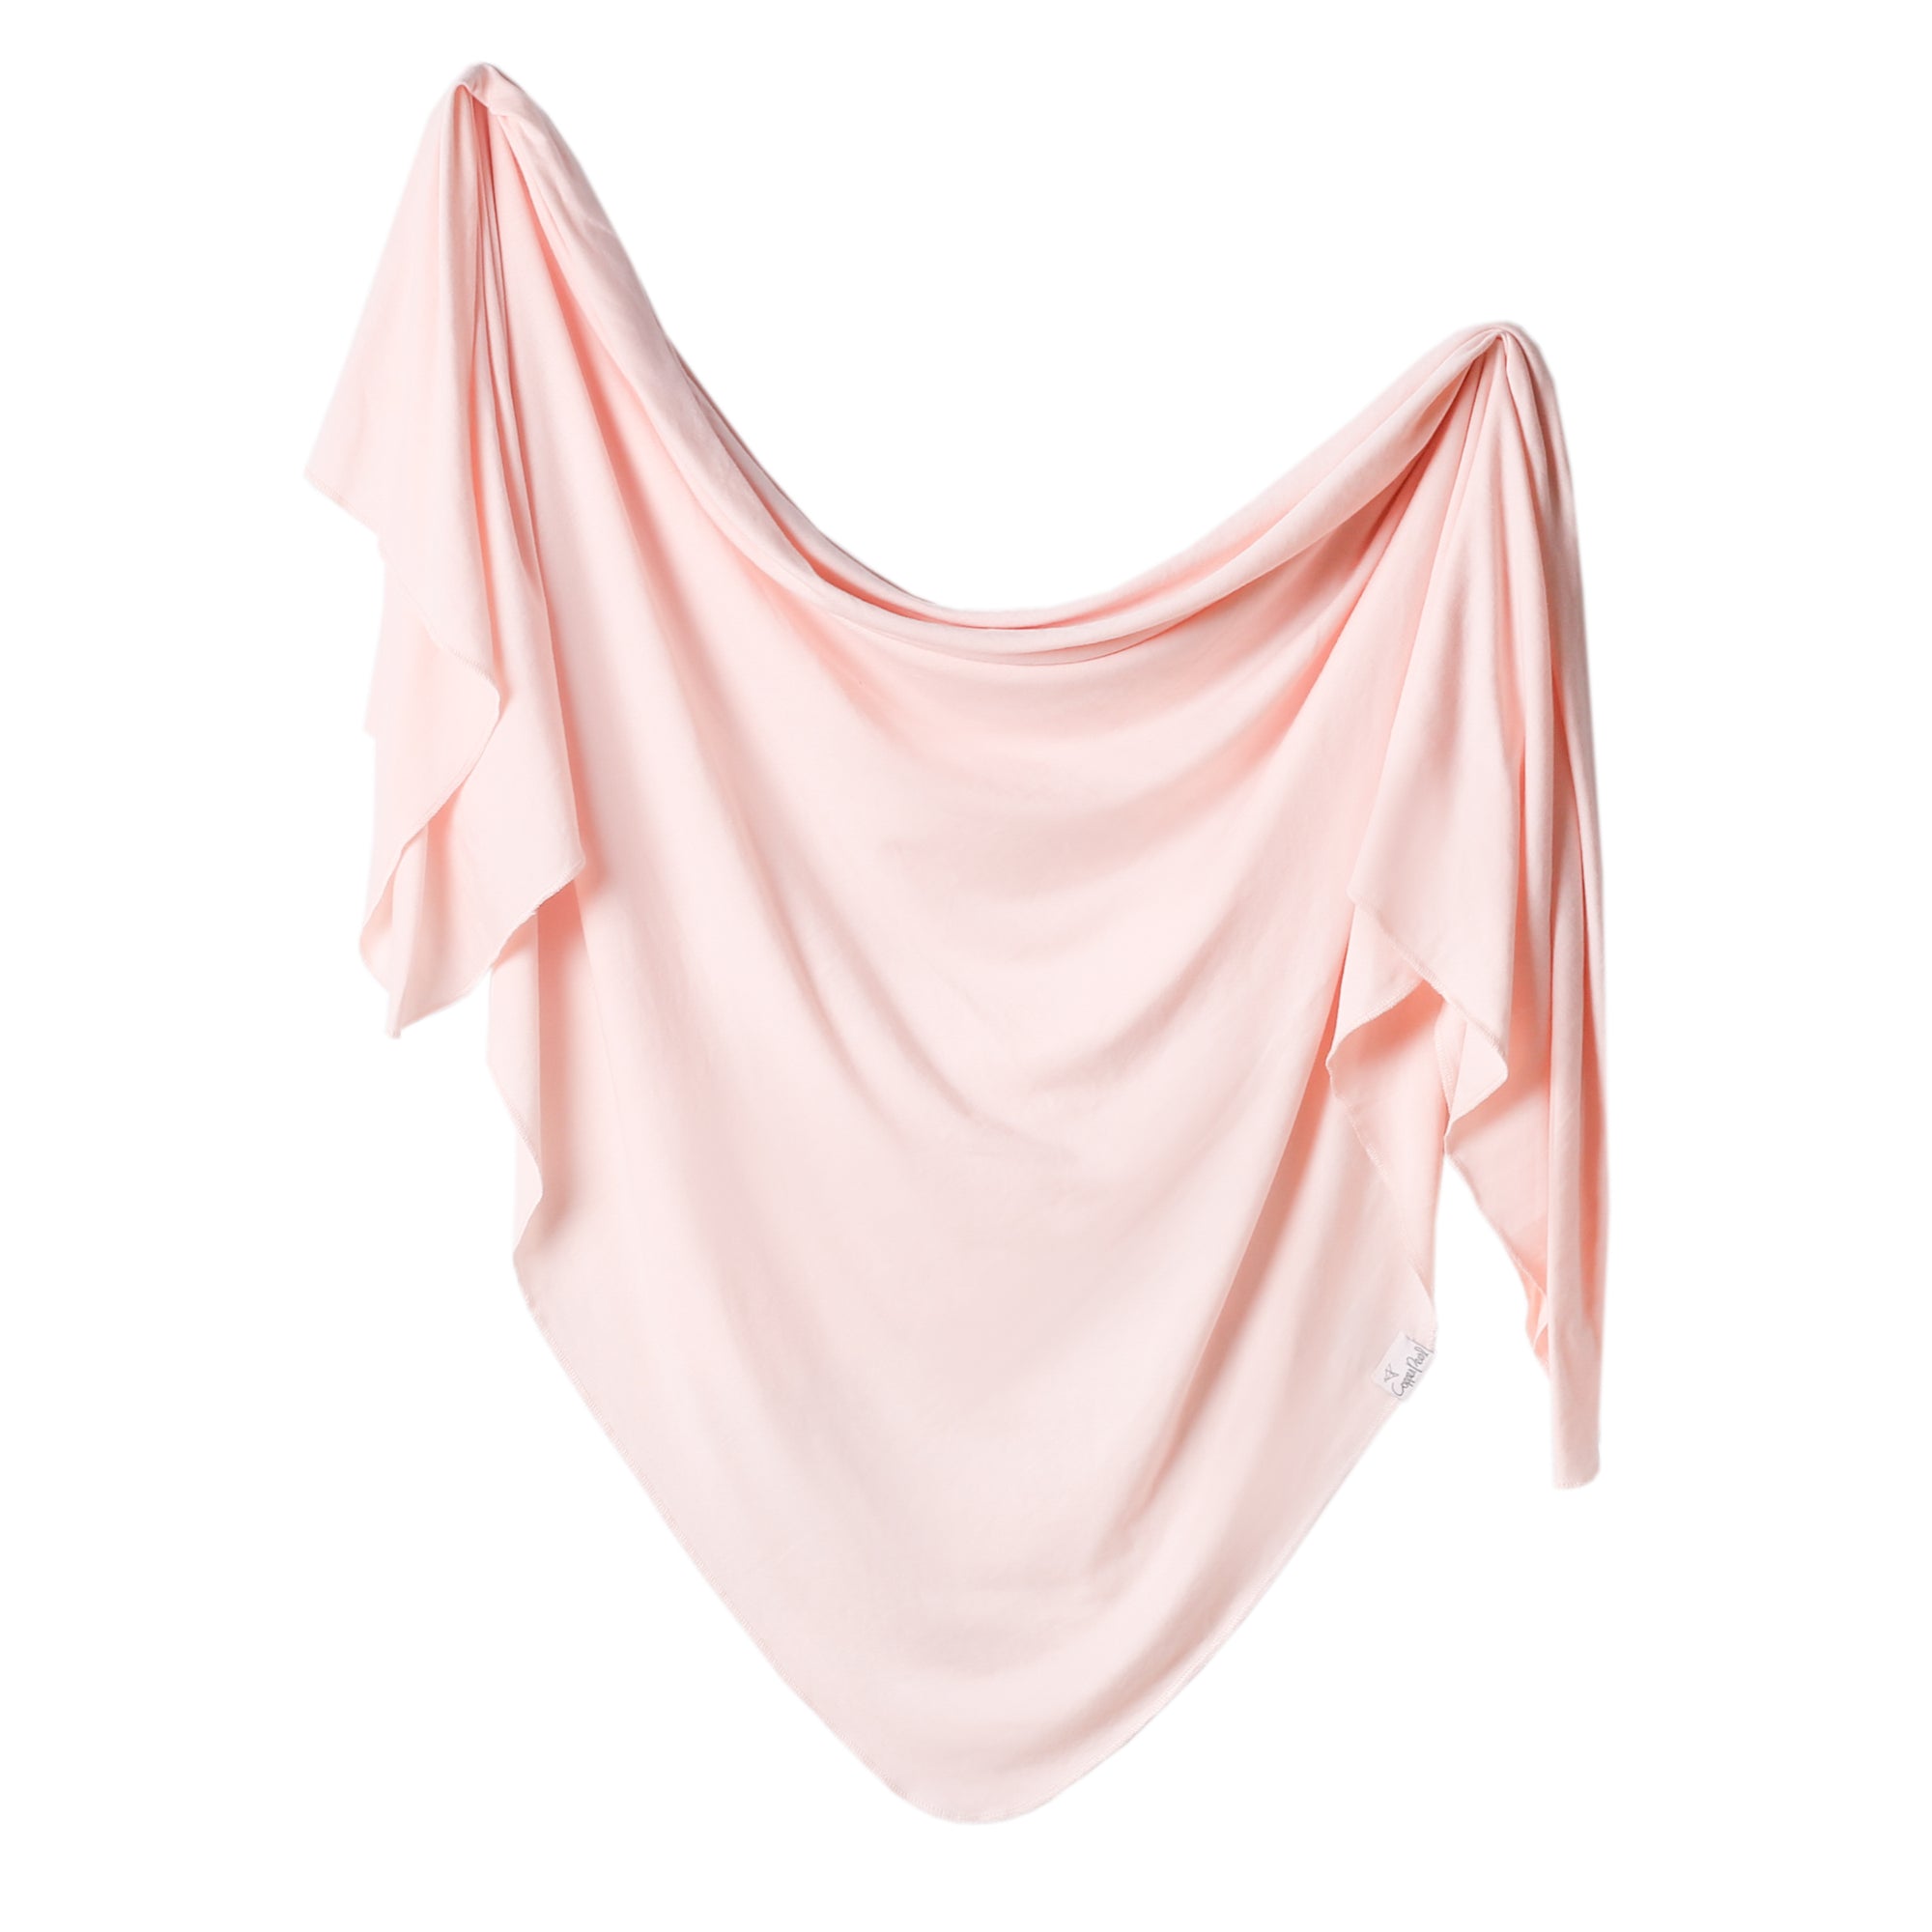 Knit Swaddle Blanket - Blush